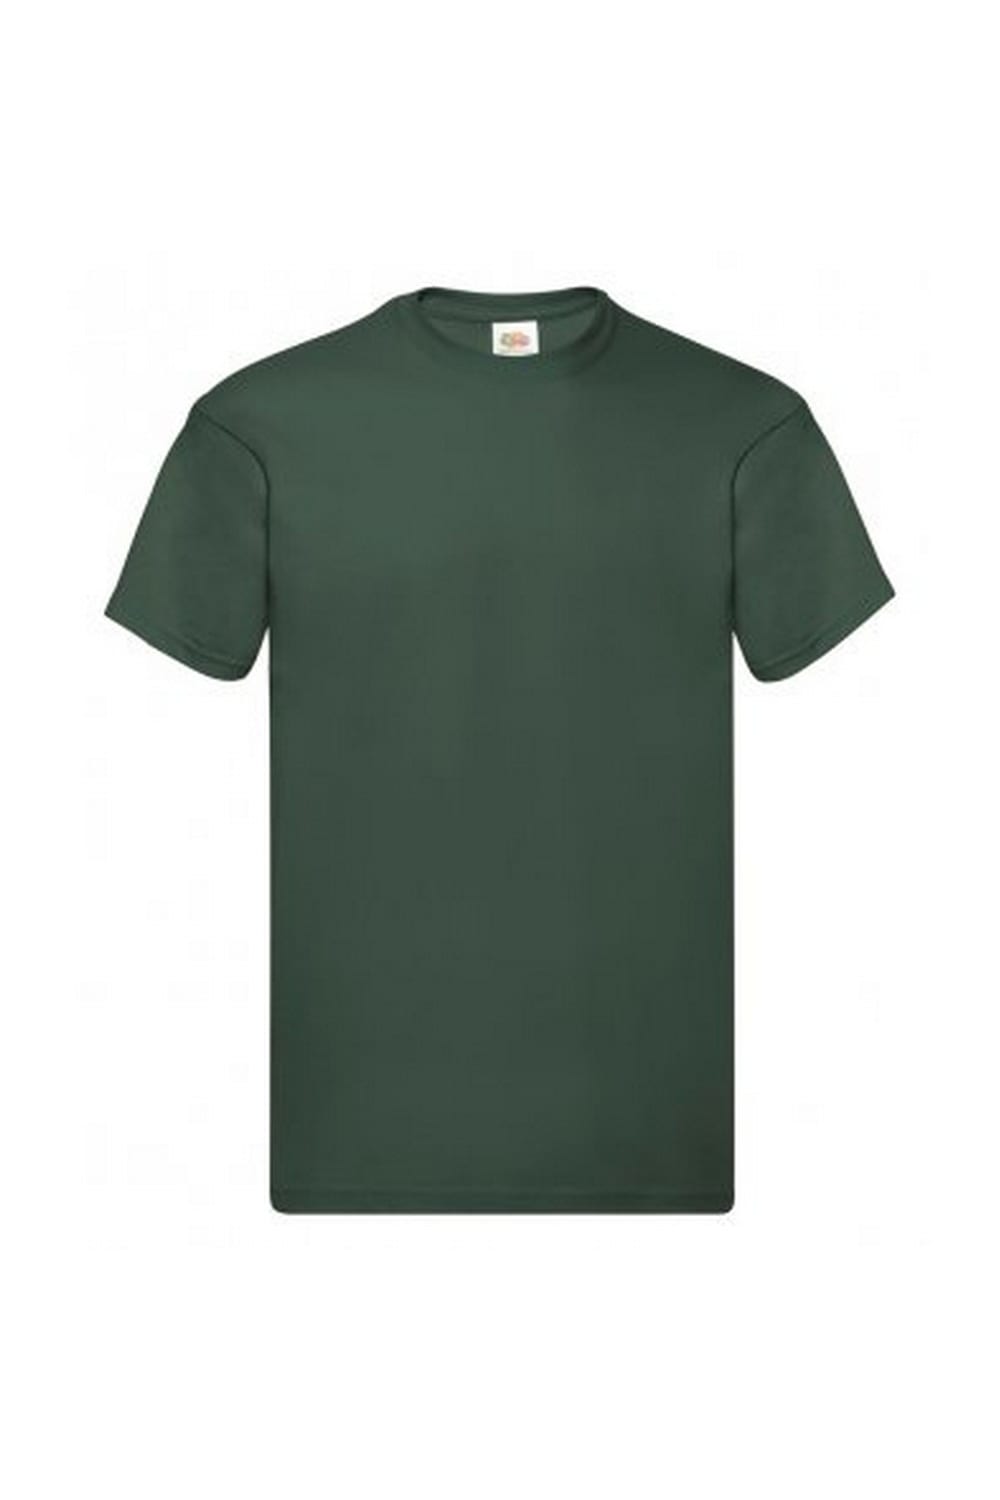 Fruit Of The Loom Mens Original Short Sleeve T-Shirt (Bottle Green)